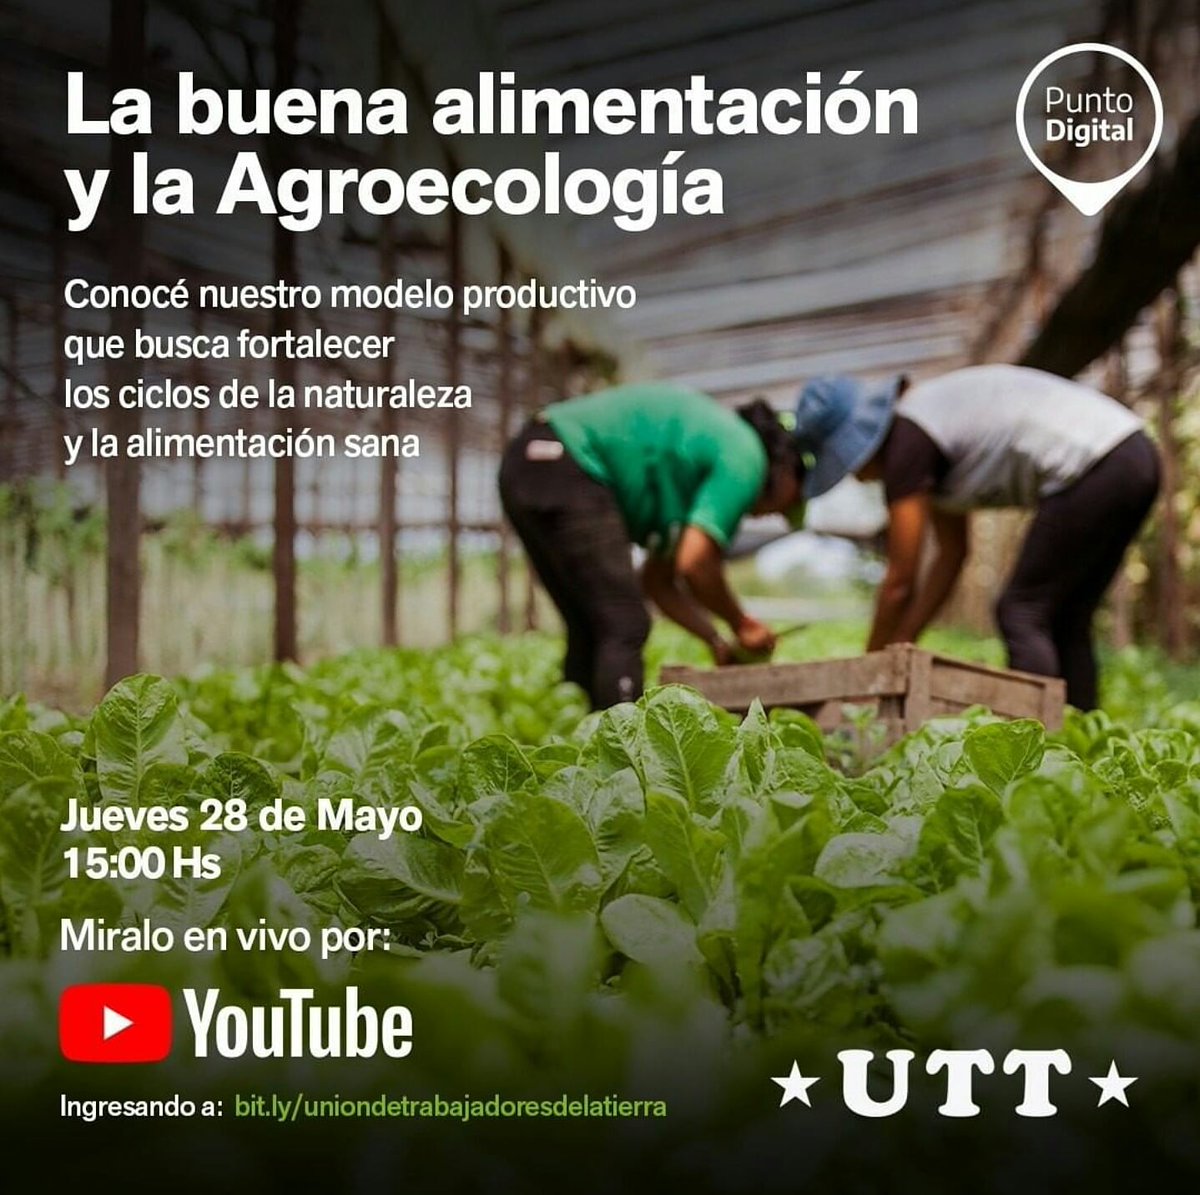 Círculo Argentino de Agroecología (@agroecologos) on Twitter photo 2020-05-26 18:53:20